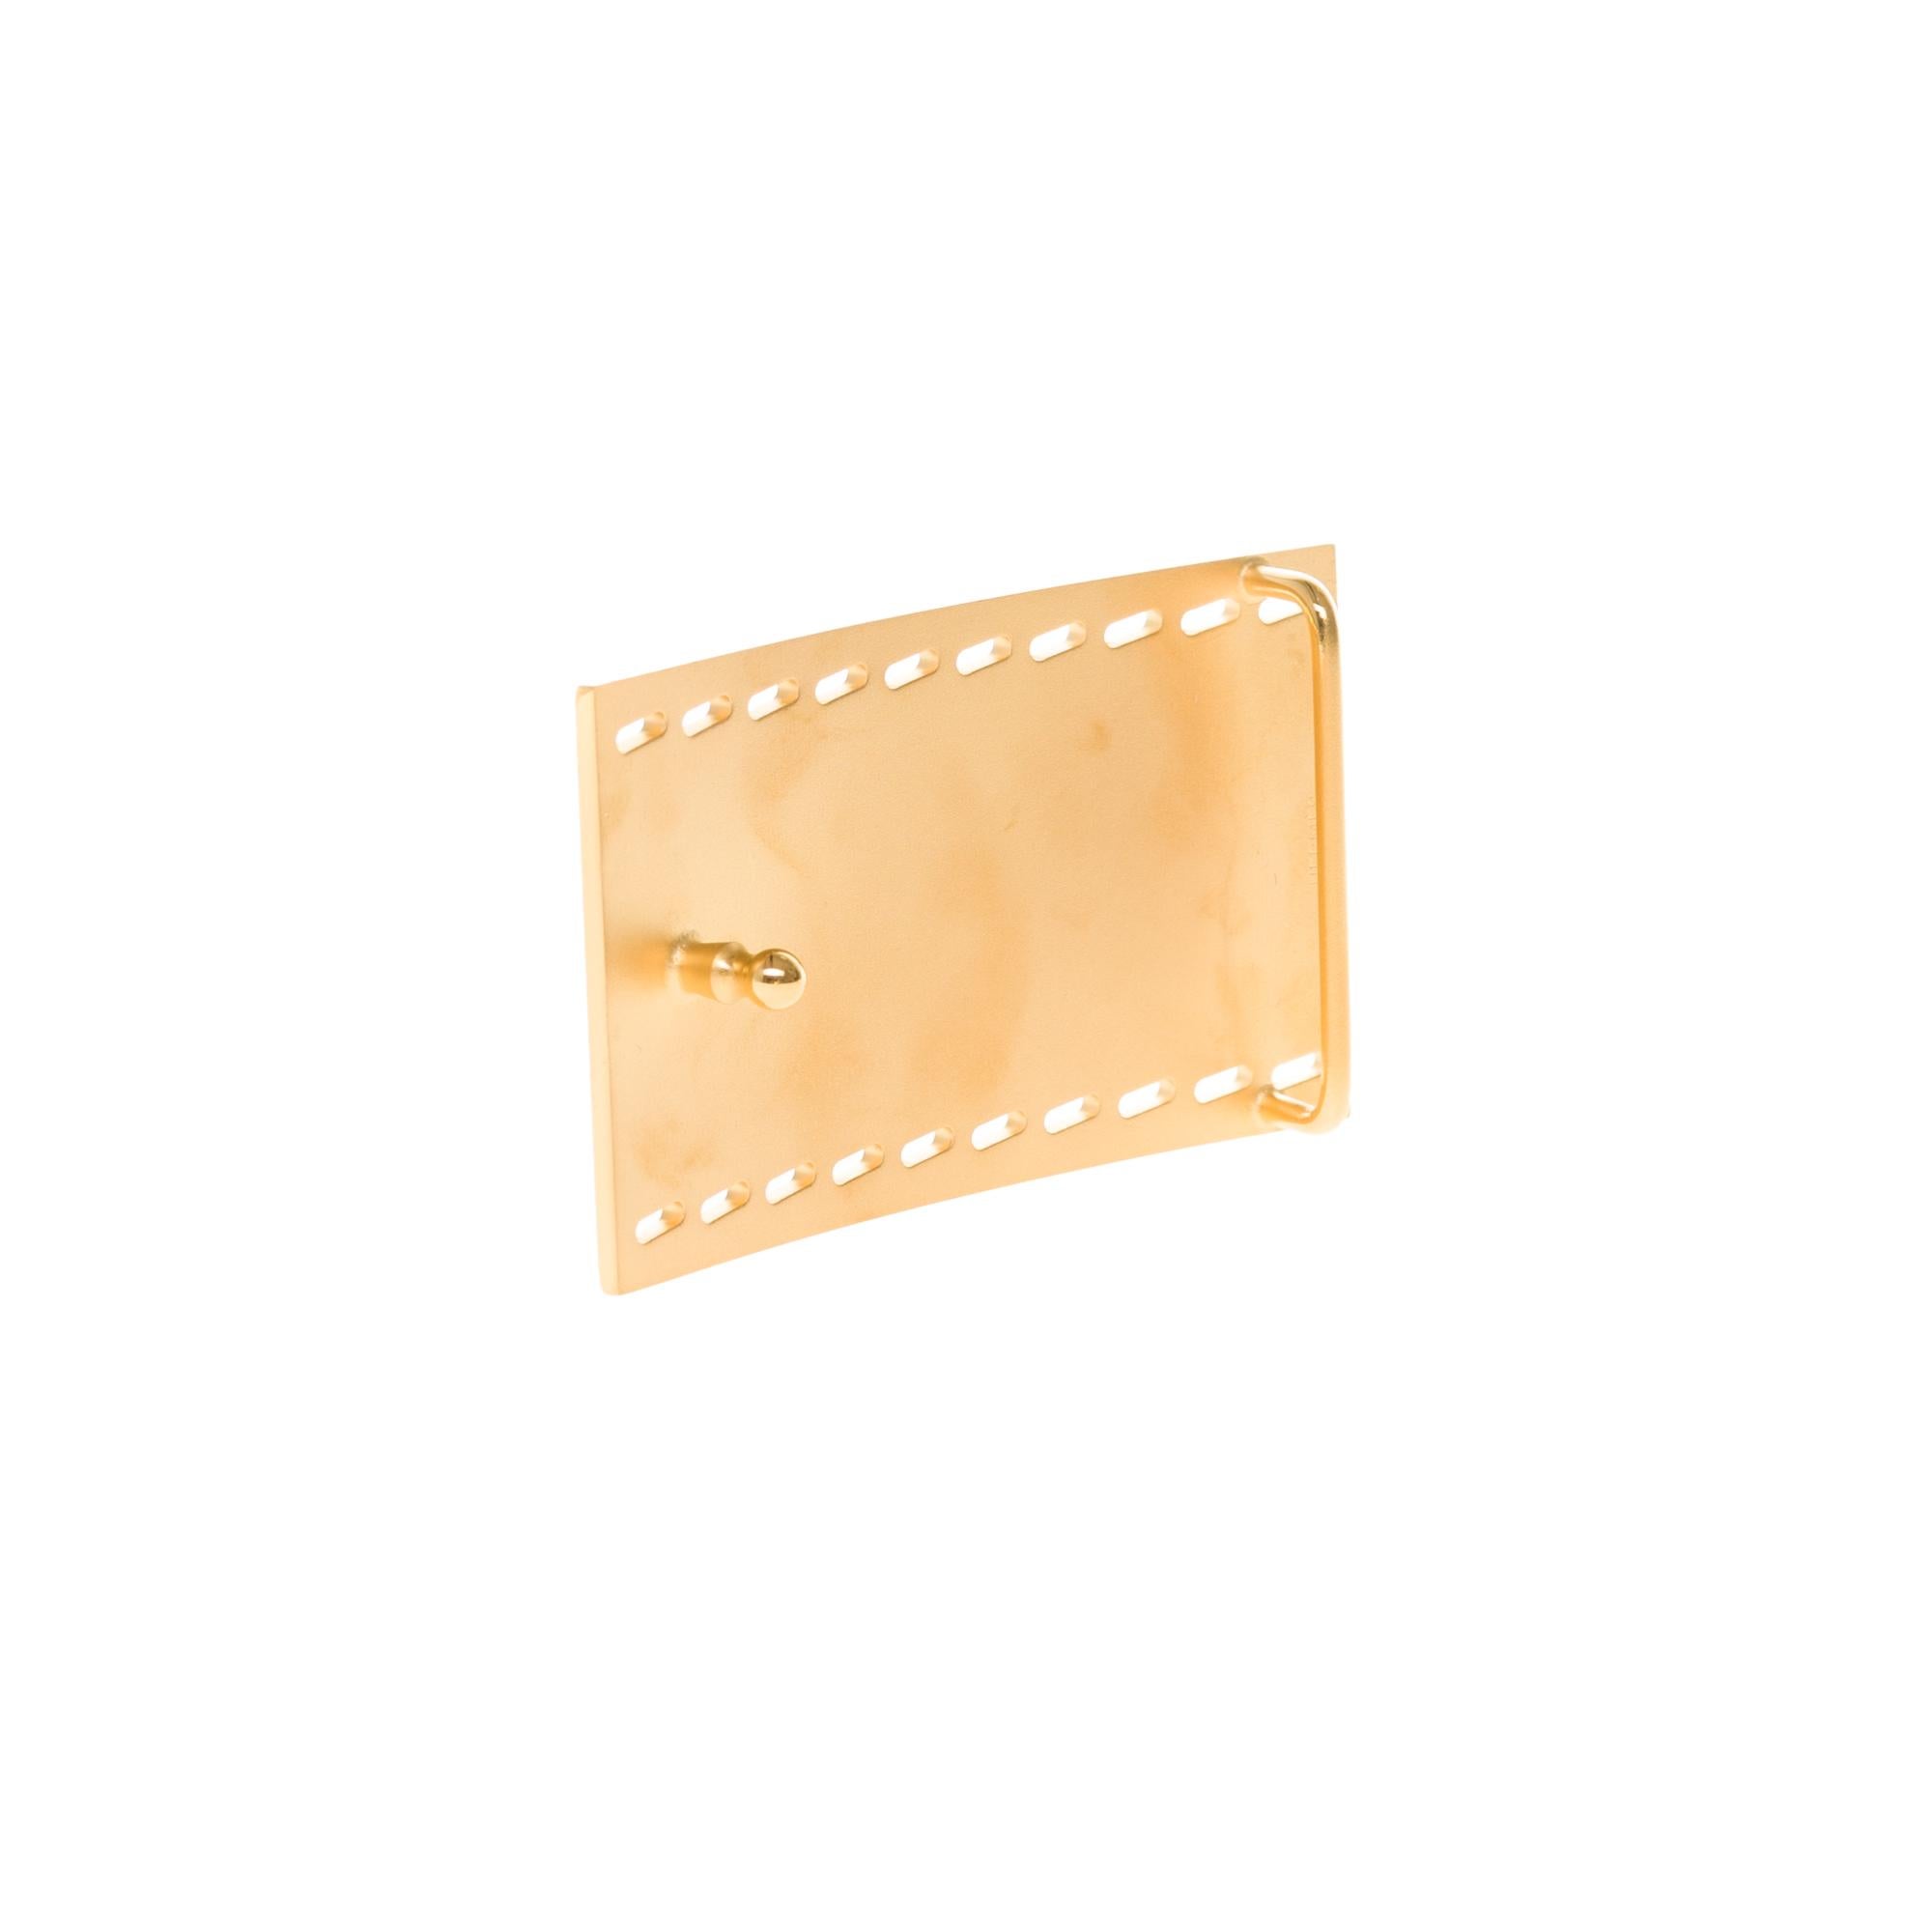 Women's or Men's Brand New Hermes Rectangle Belt Buckle in gold plated metal (37mm)